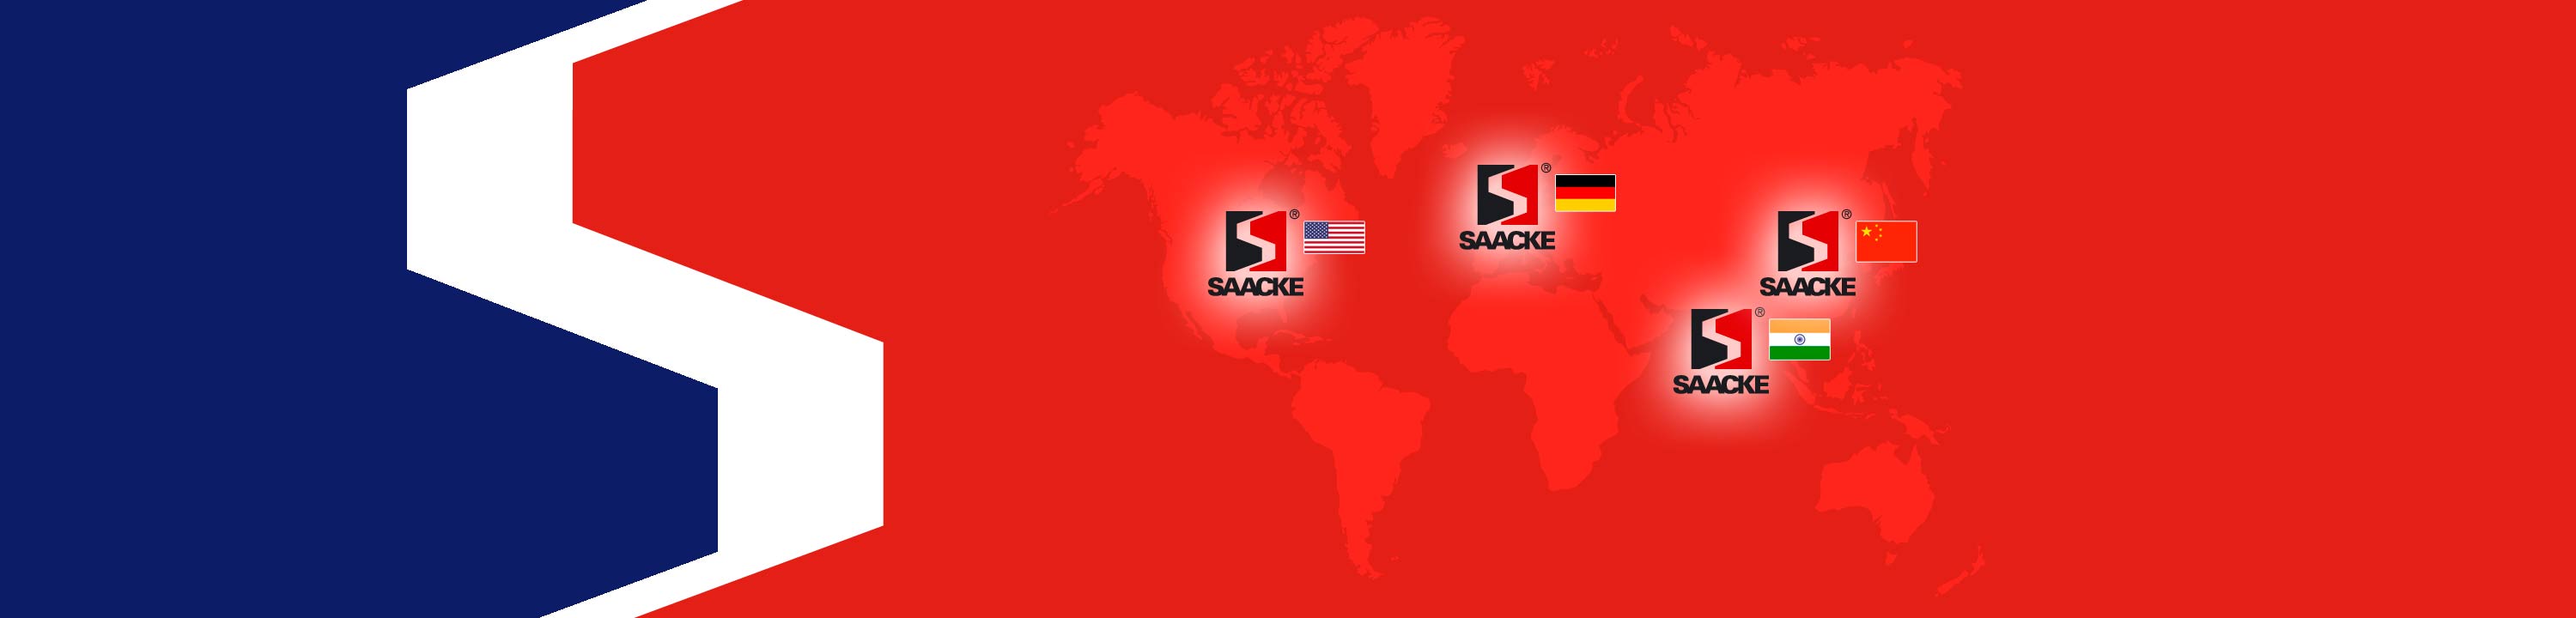 Saacke Locations